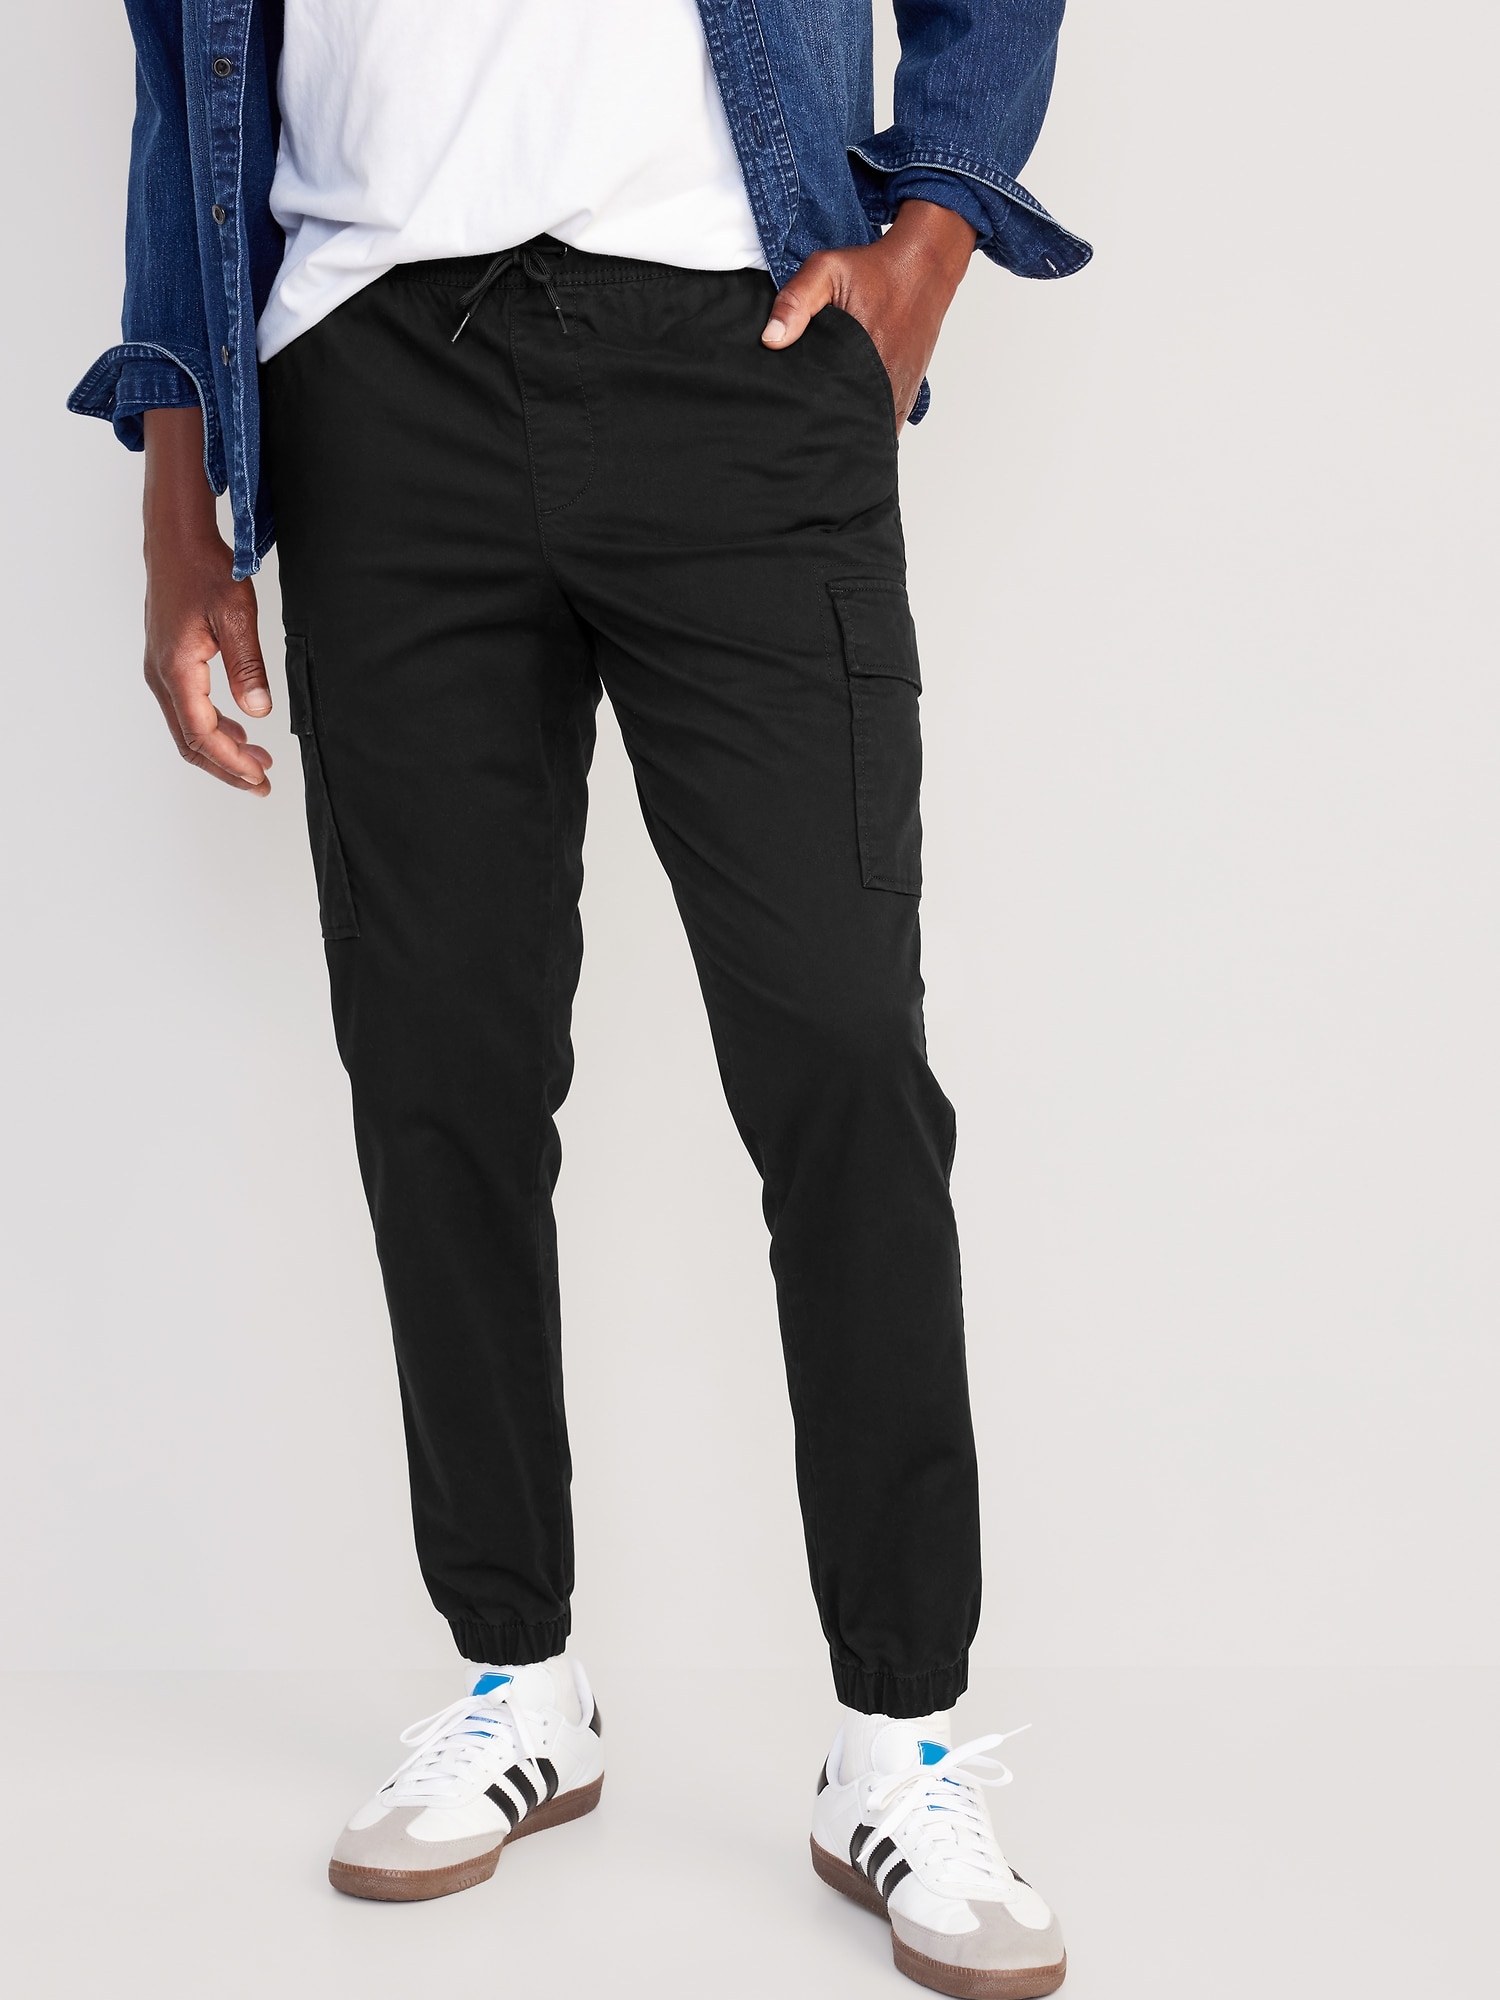 Wear Black Cargo Pants Mens | Fashion Hip Hop Cargo Harem Pants Men - New  Men's - Aliexpress